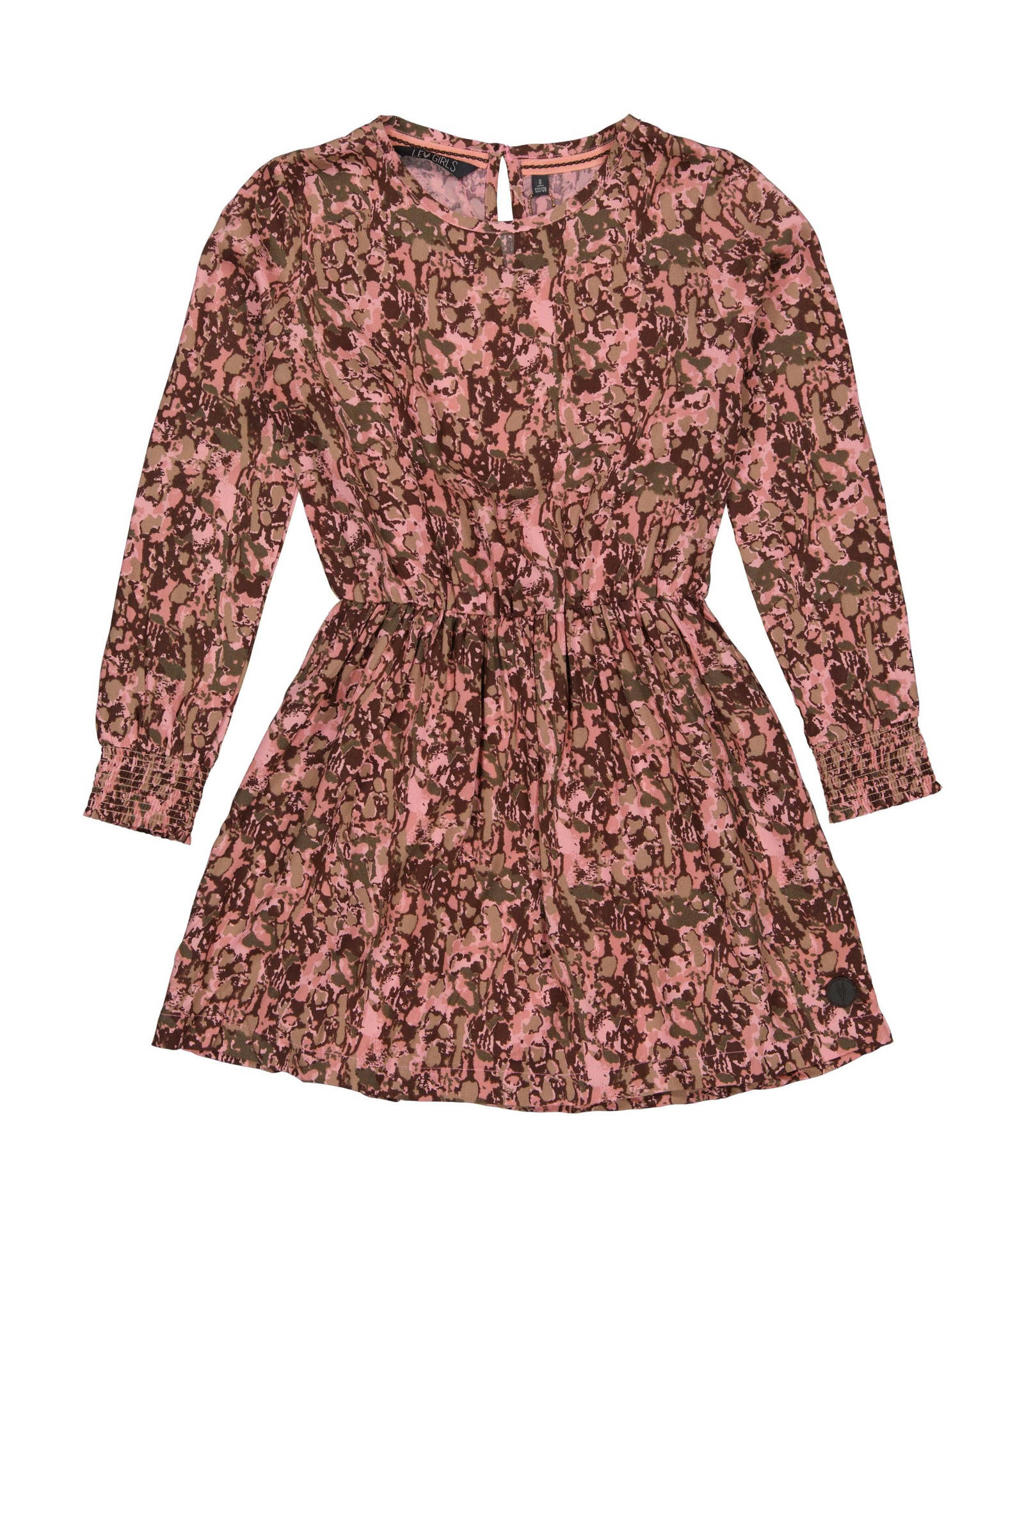 LEVV jurk Aafke met all over print roze/bruin